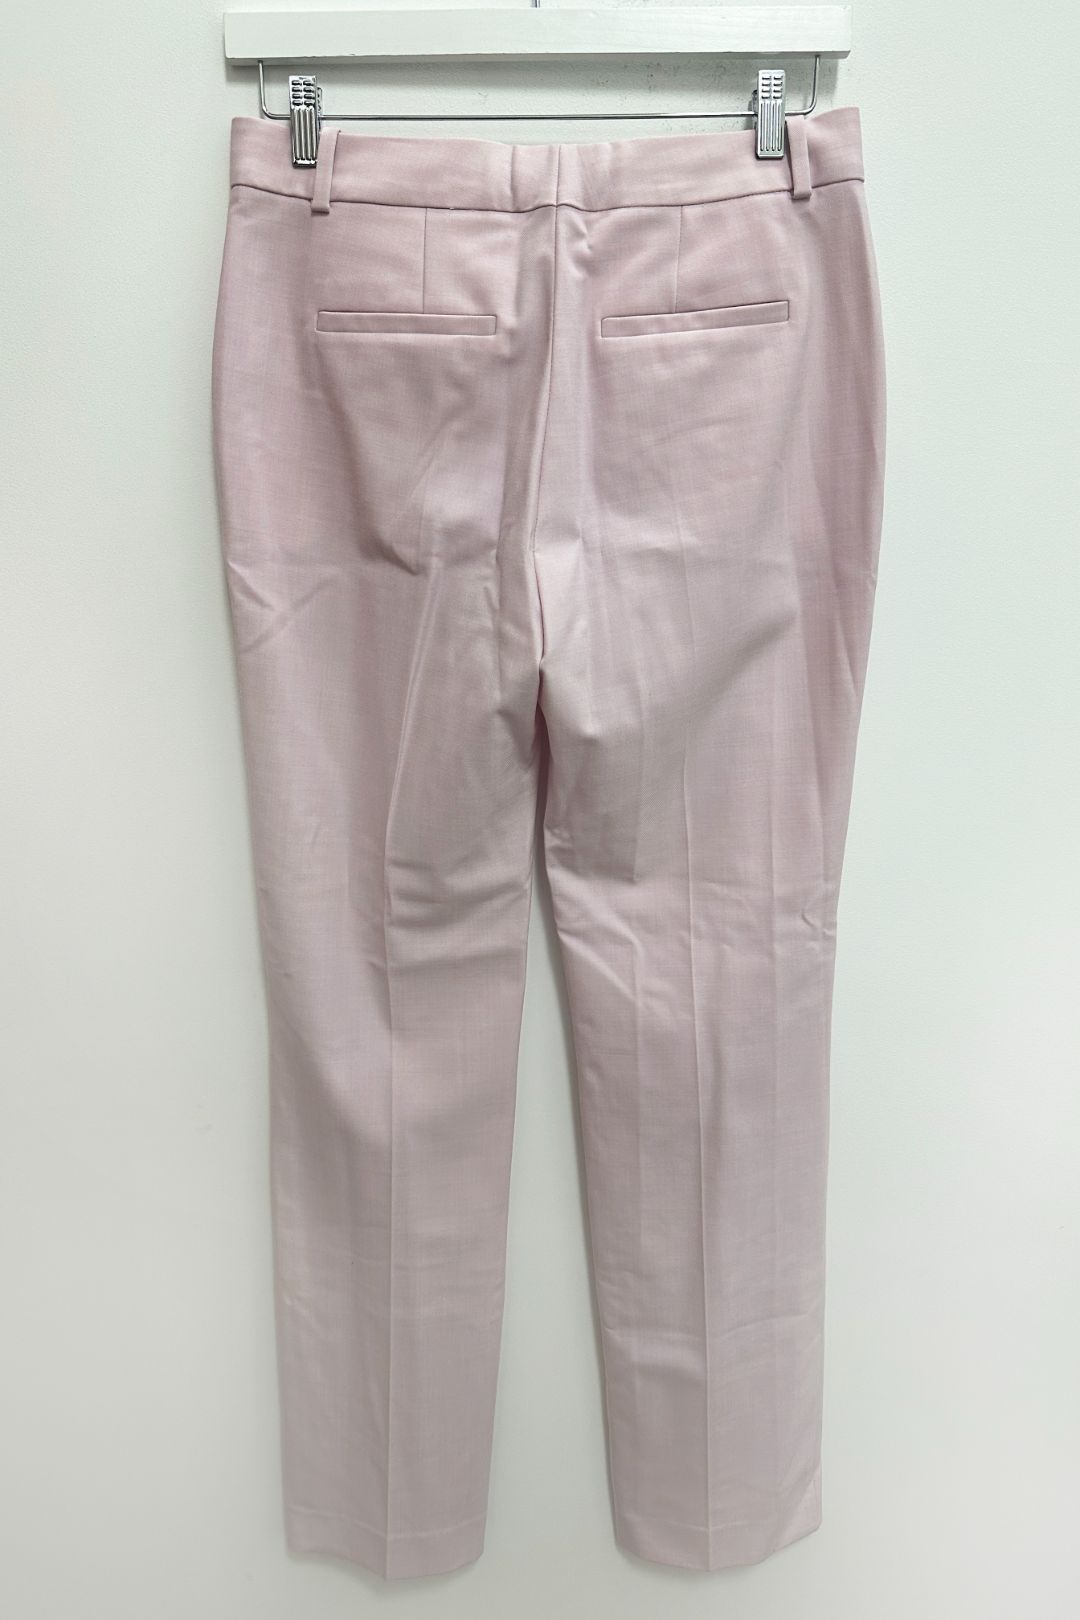 Victoria Beckham Pink Tailored Straight Leg Suit Pants